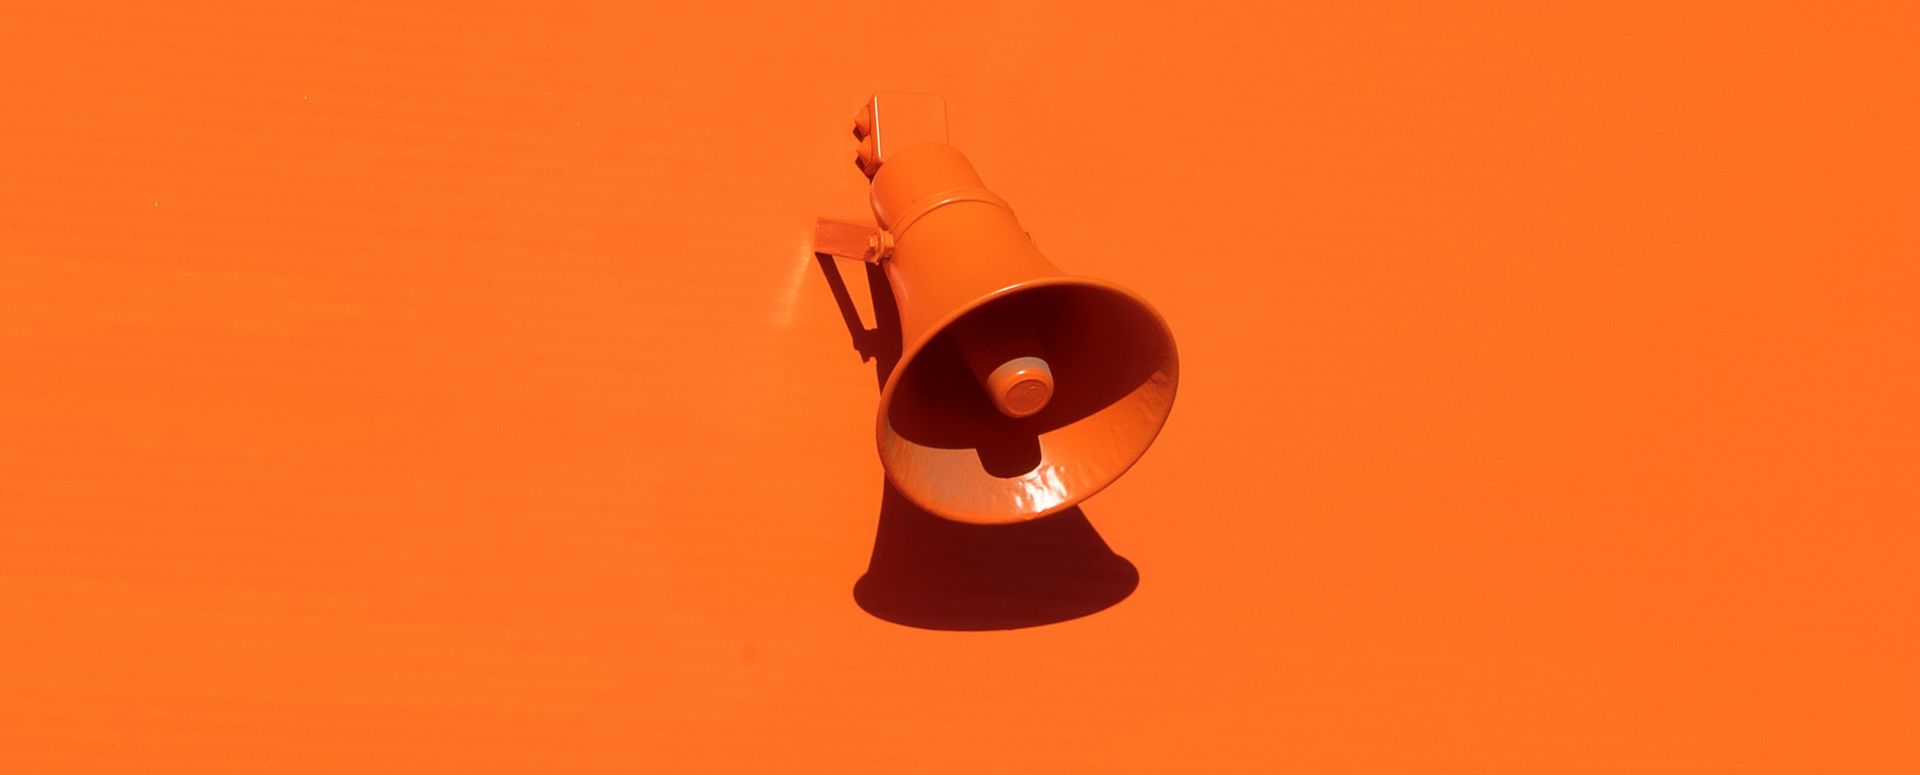 An orange megaphone on a orange background